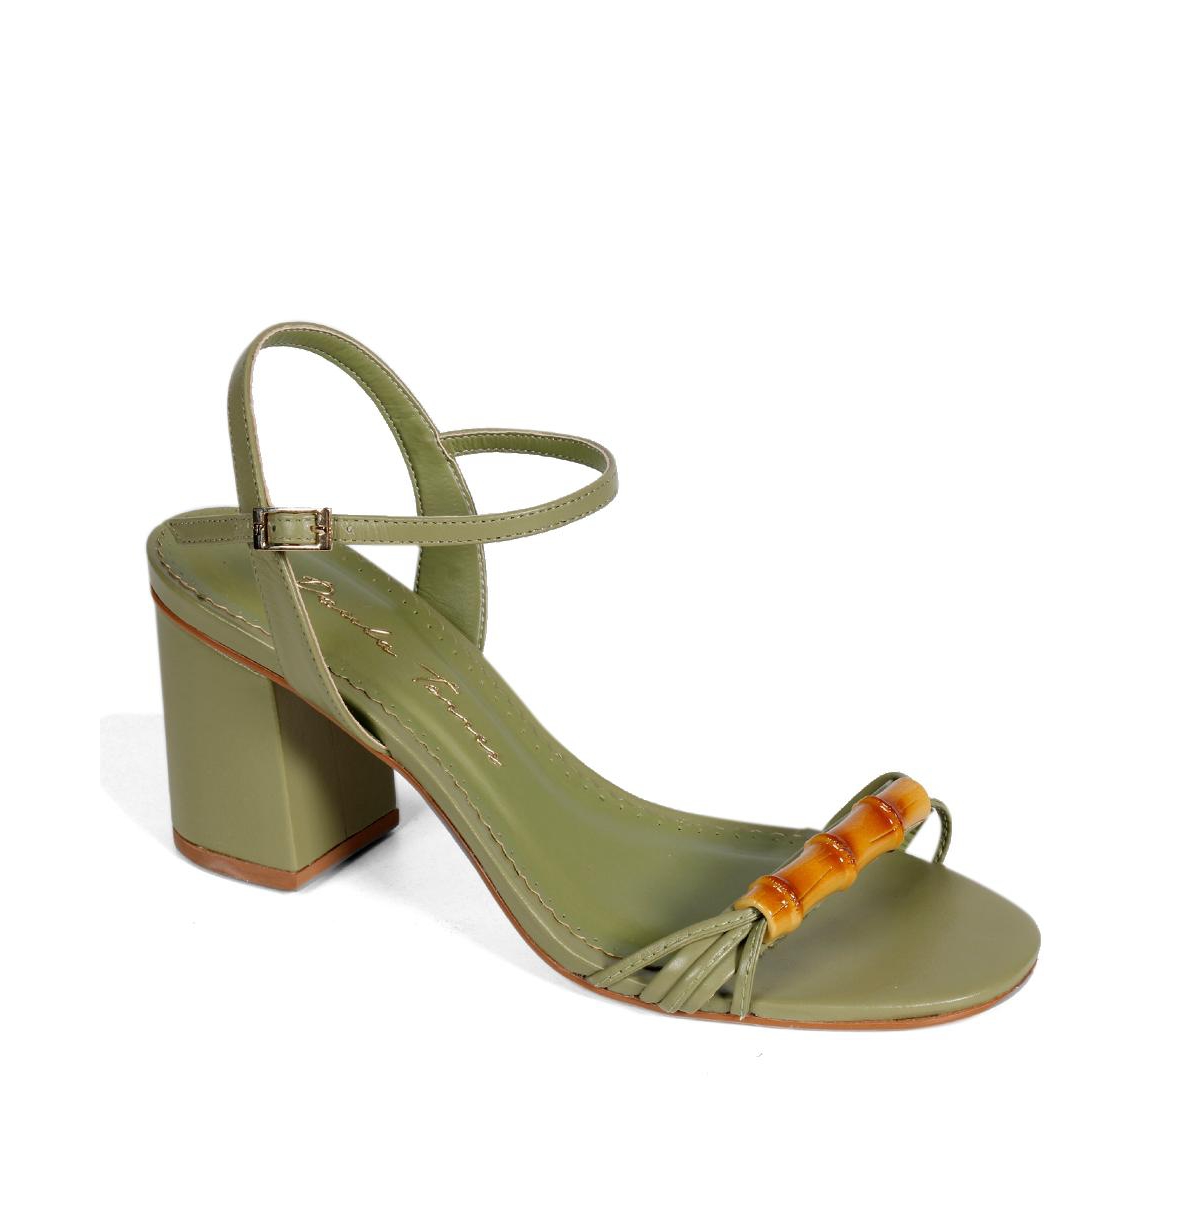 Shoes Women's Lia Block Heel Sandal - Olive